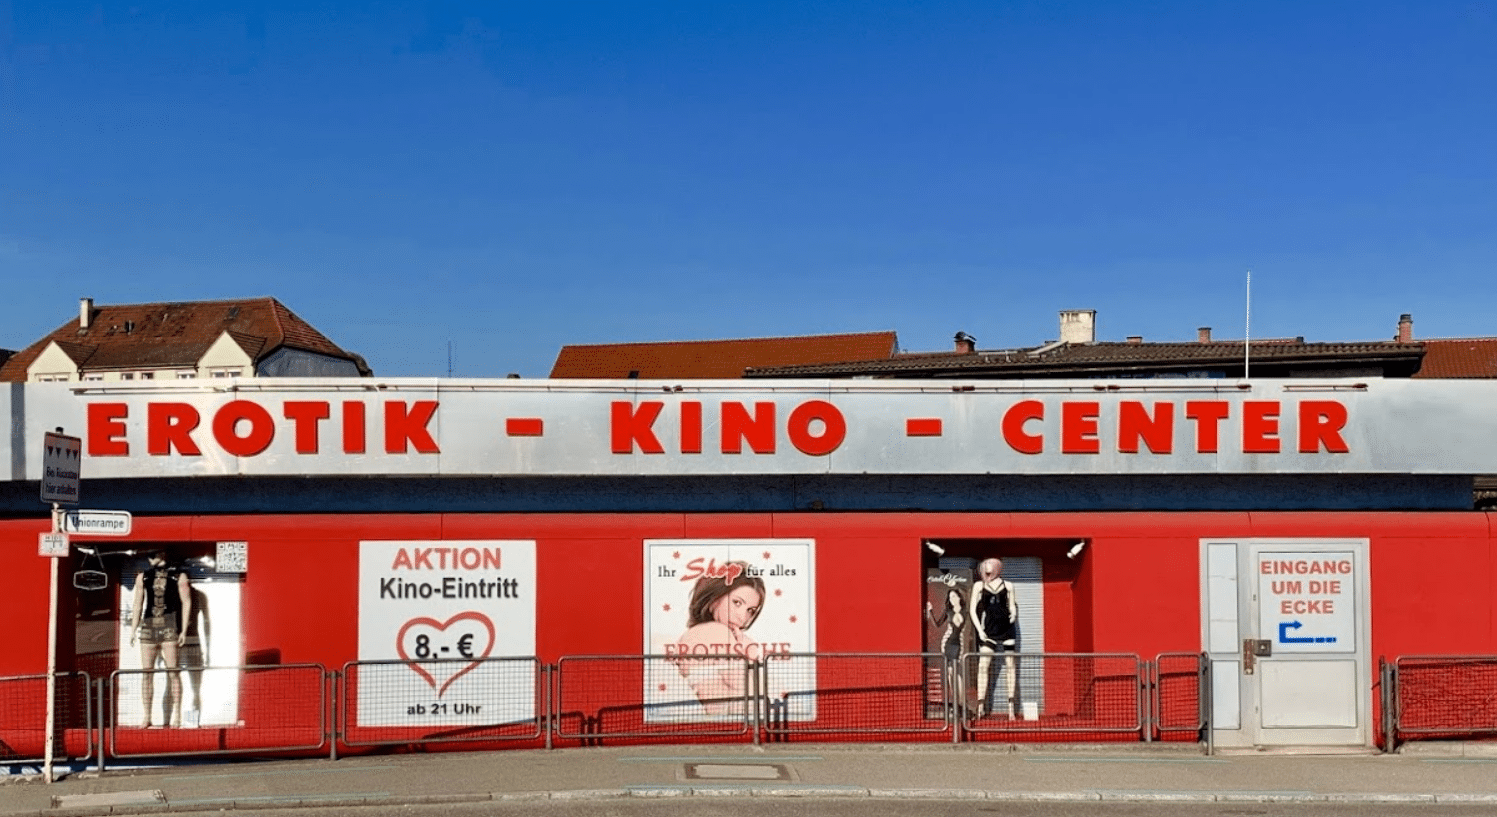 Erotik - Kino - Center